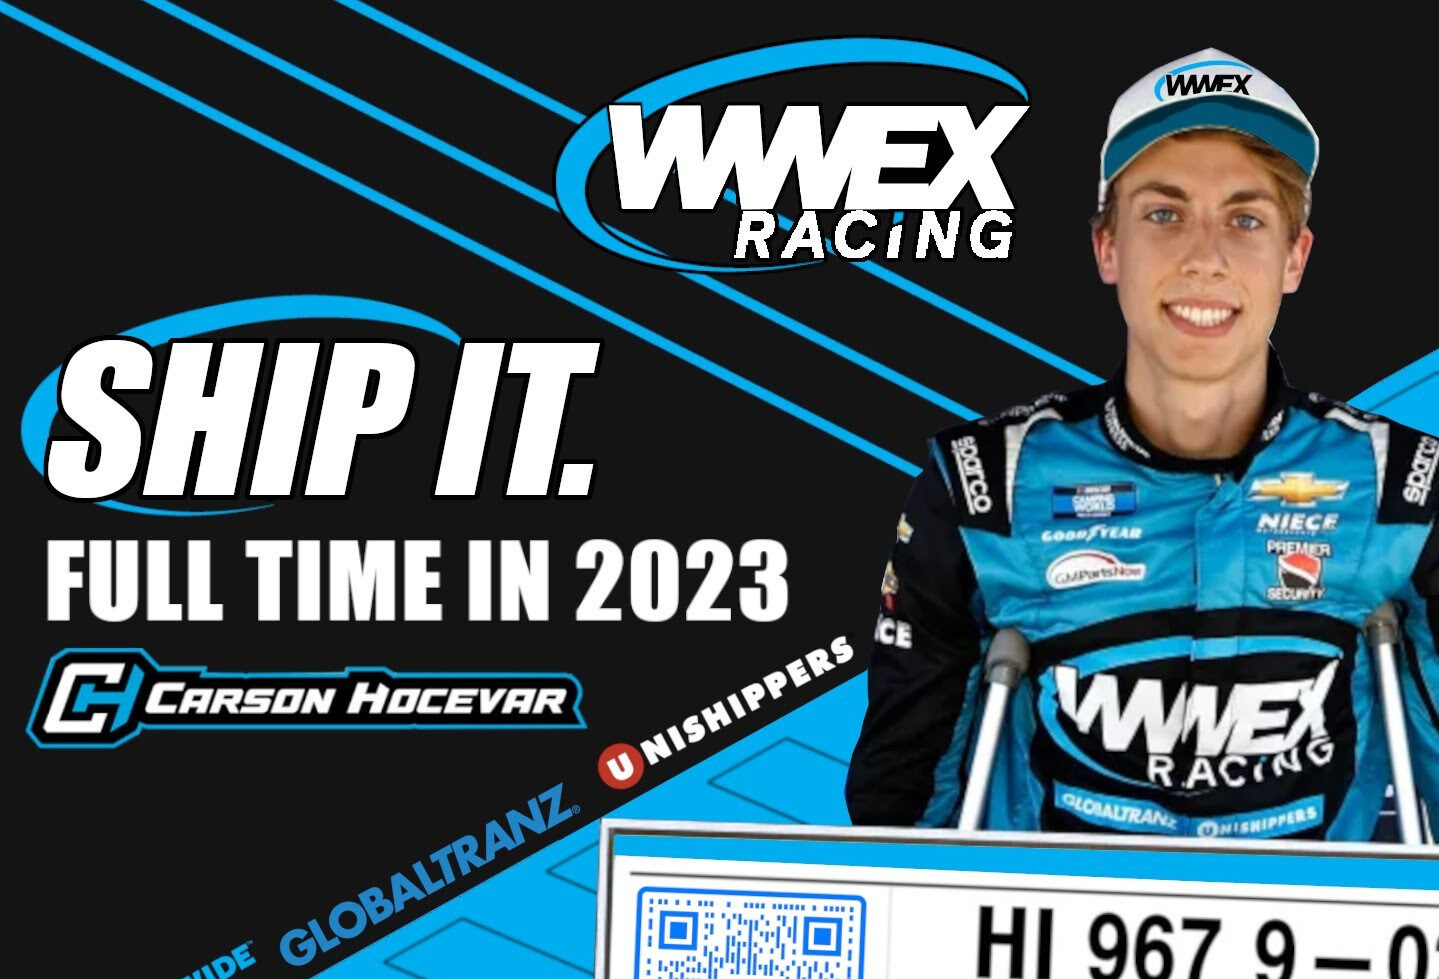 https://speedwaymedia.com/wp-content/uploads/2022/12/Carson-Hocevar-and-WWEX-Racing-to-Partner-for-Full-Season-in-2023-e1670509571325.jpg